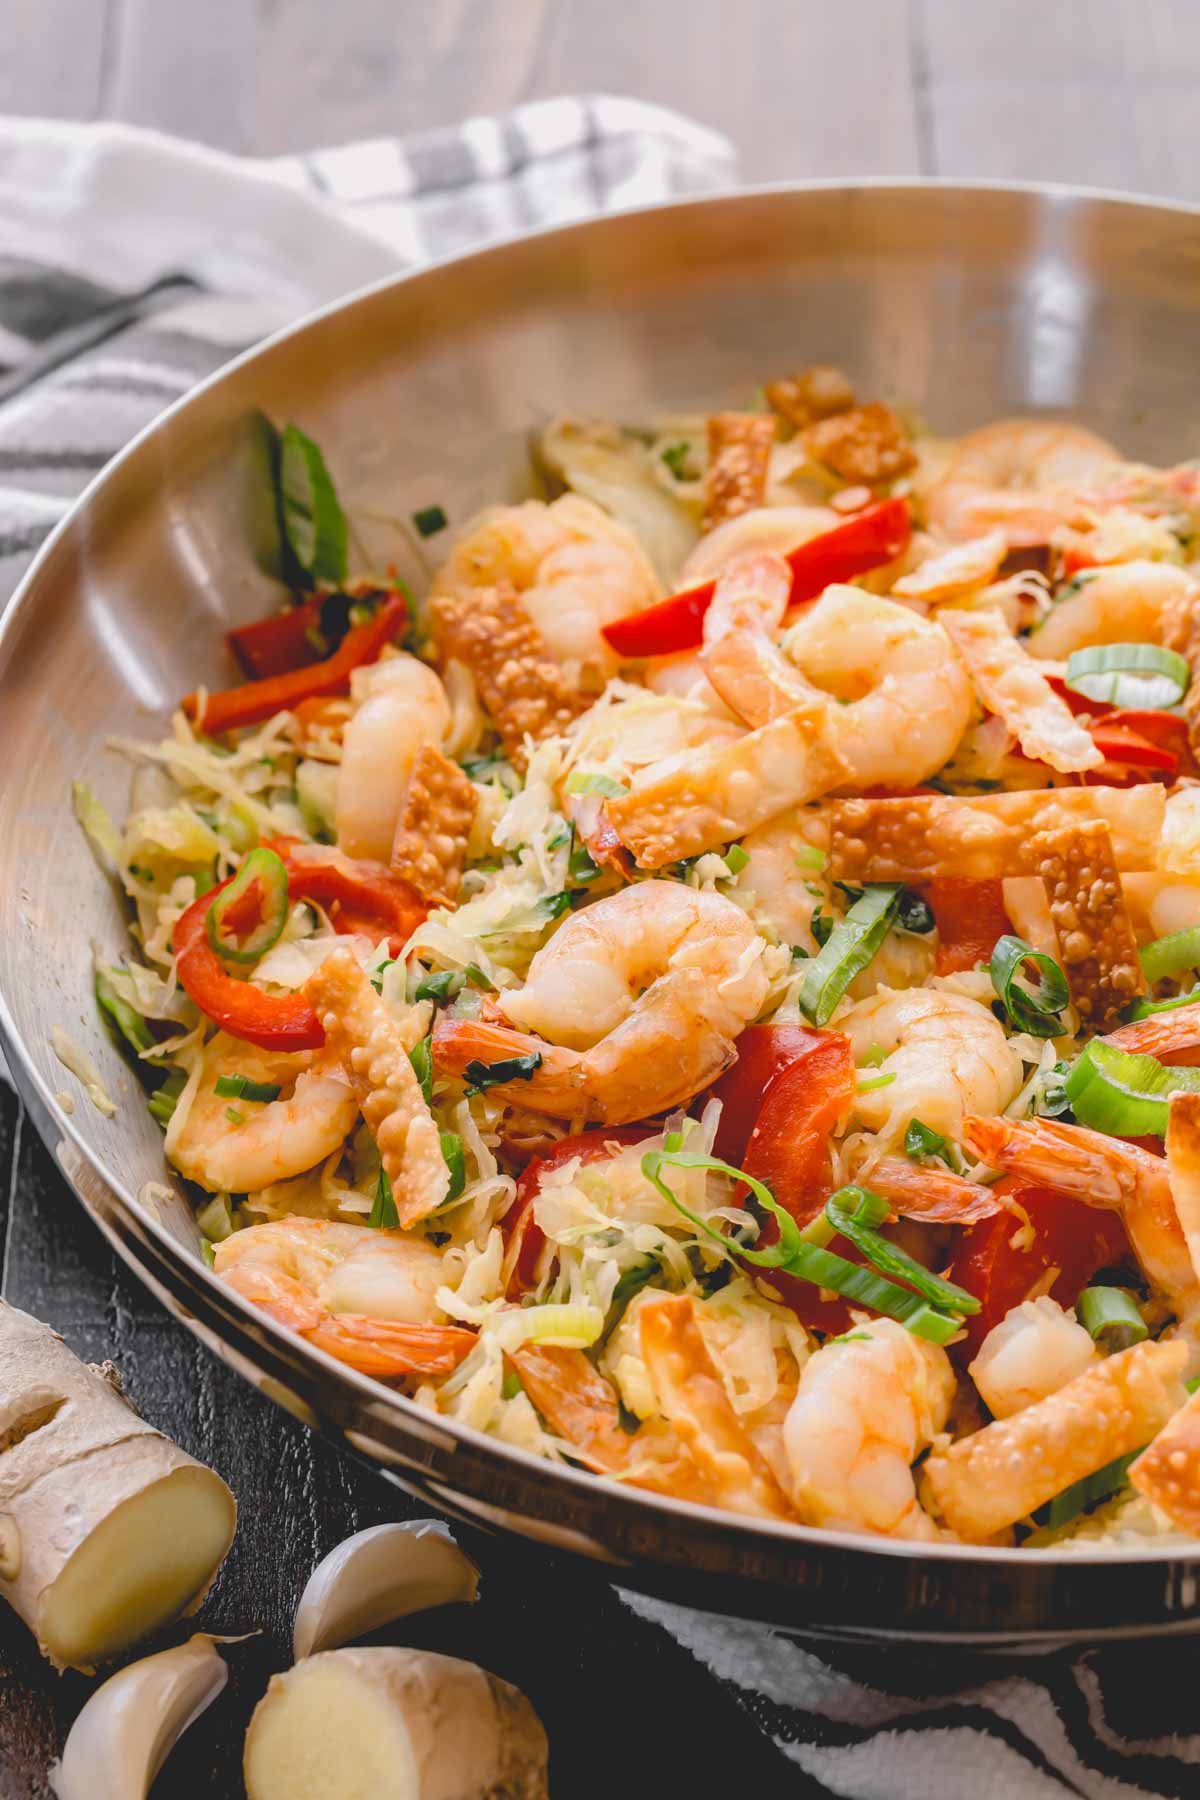 Shrimp and cabbage stir fry in a skillet.